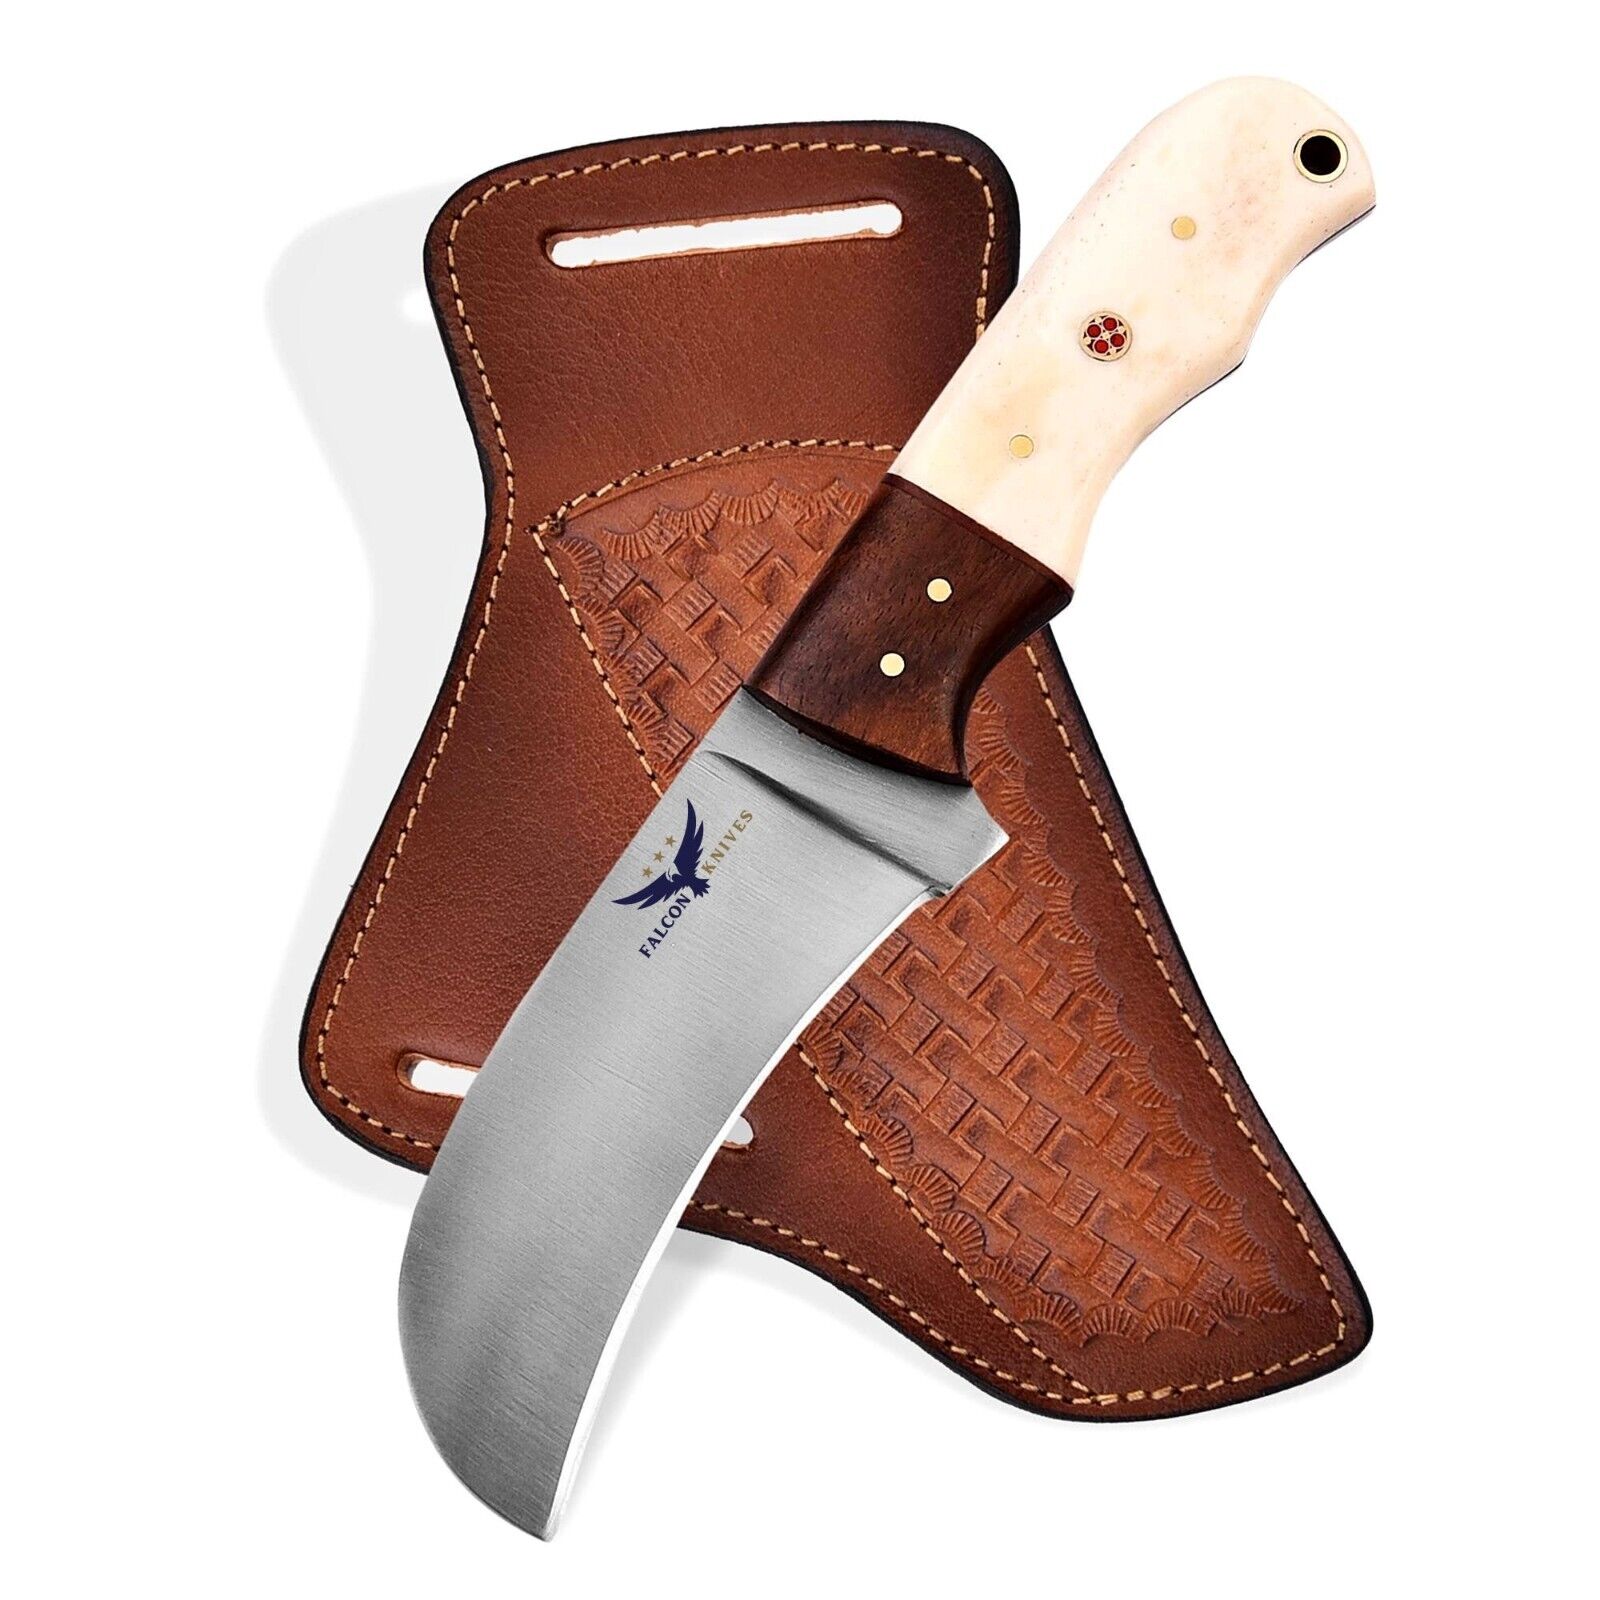 Handmade Lineman's Hawkbill Knife with Sheath, Fixed blade Electrician knife